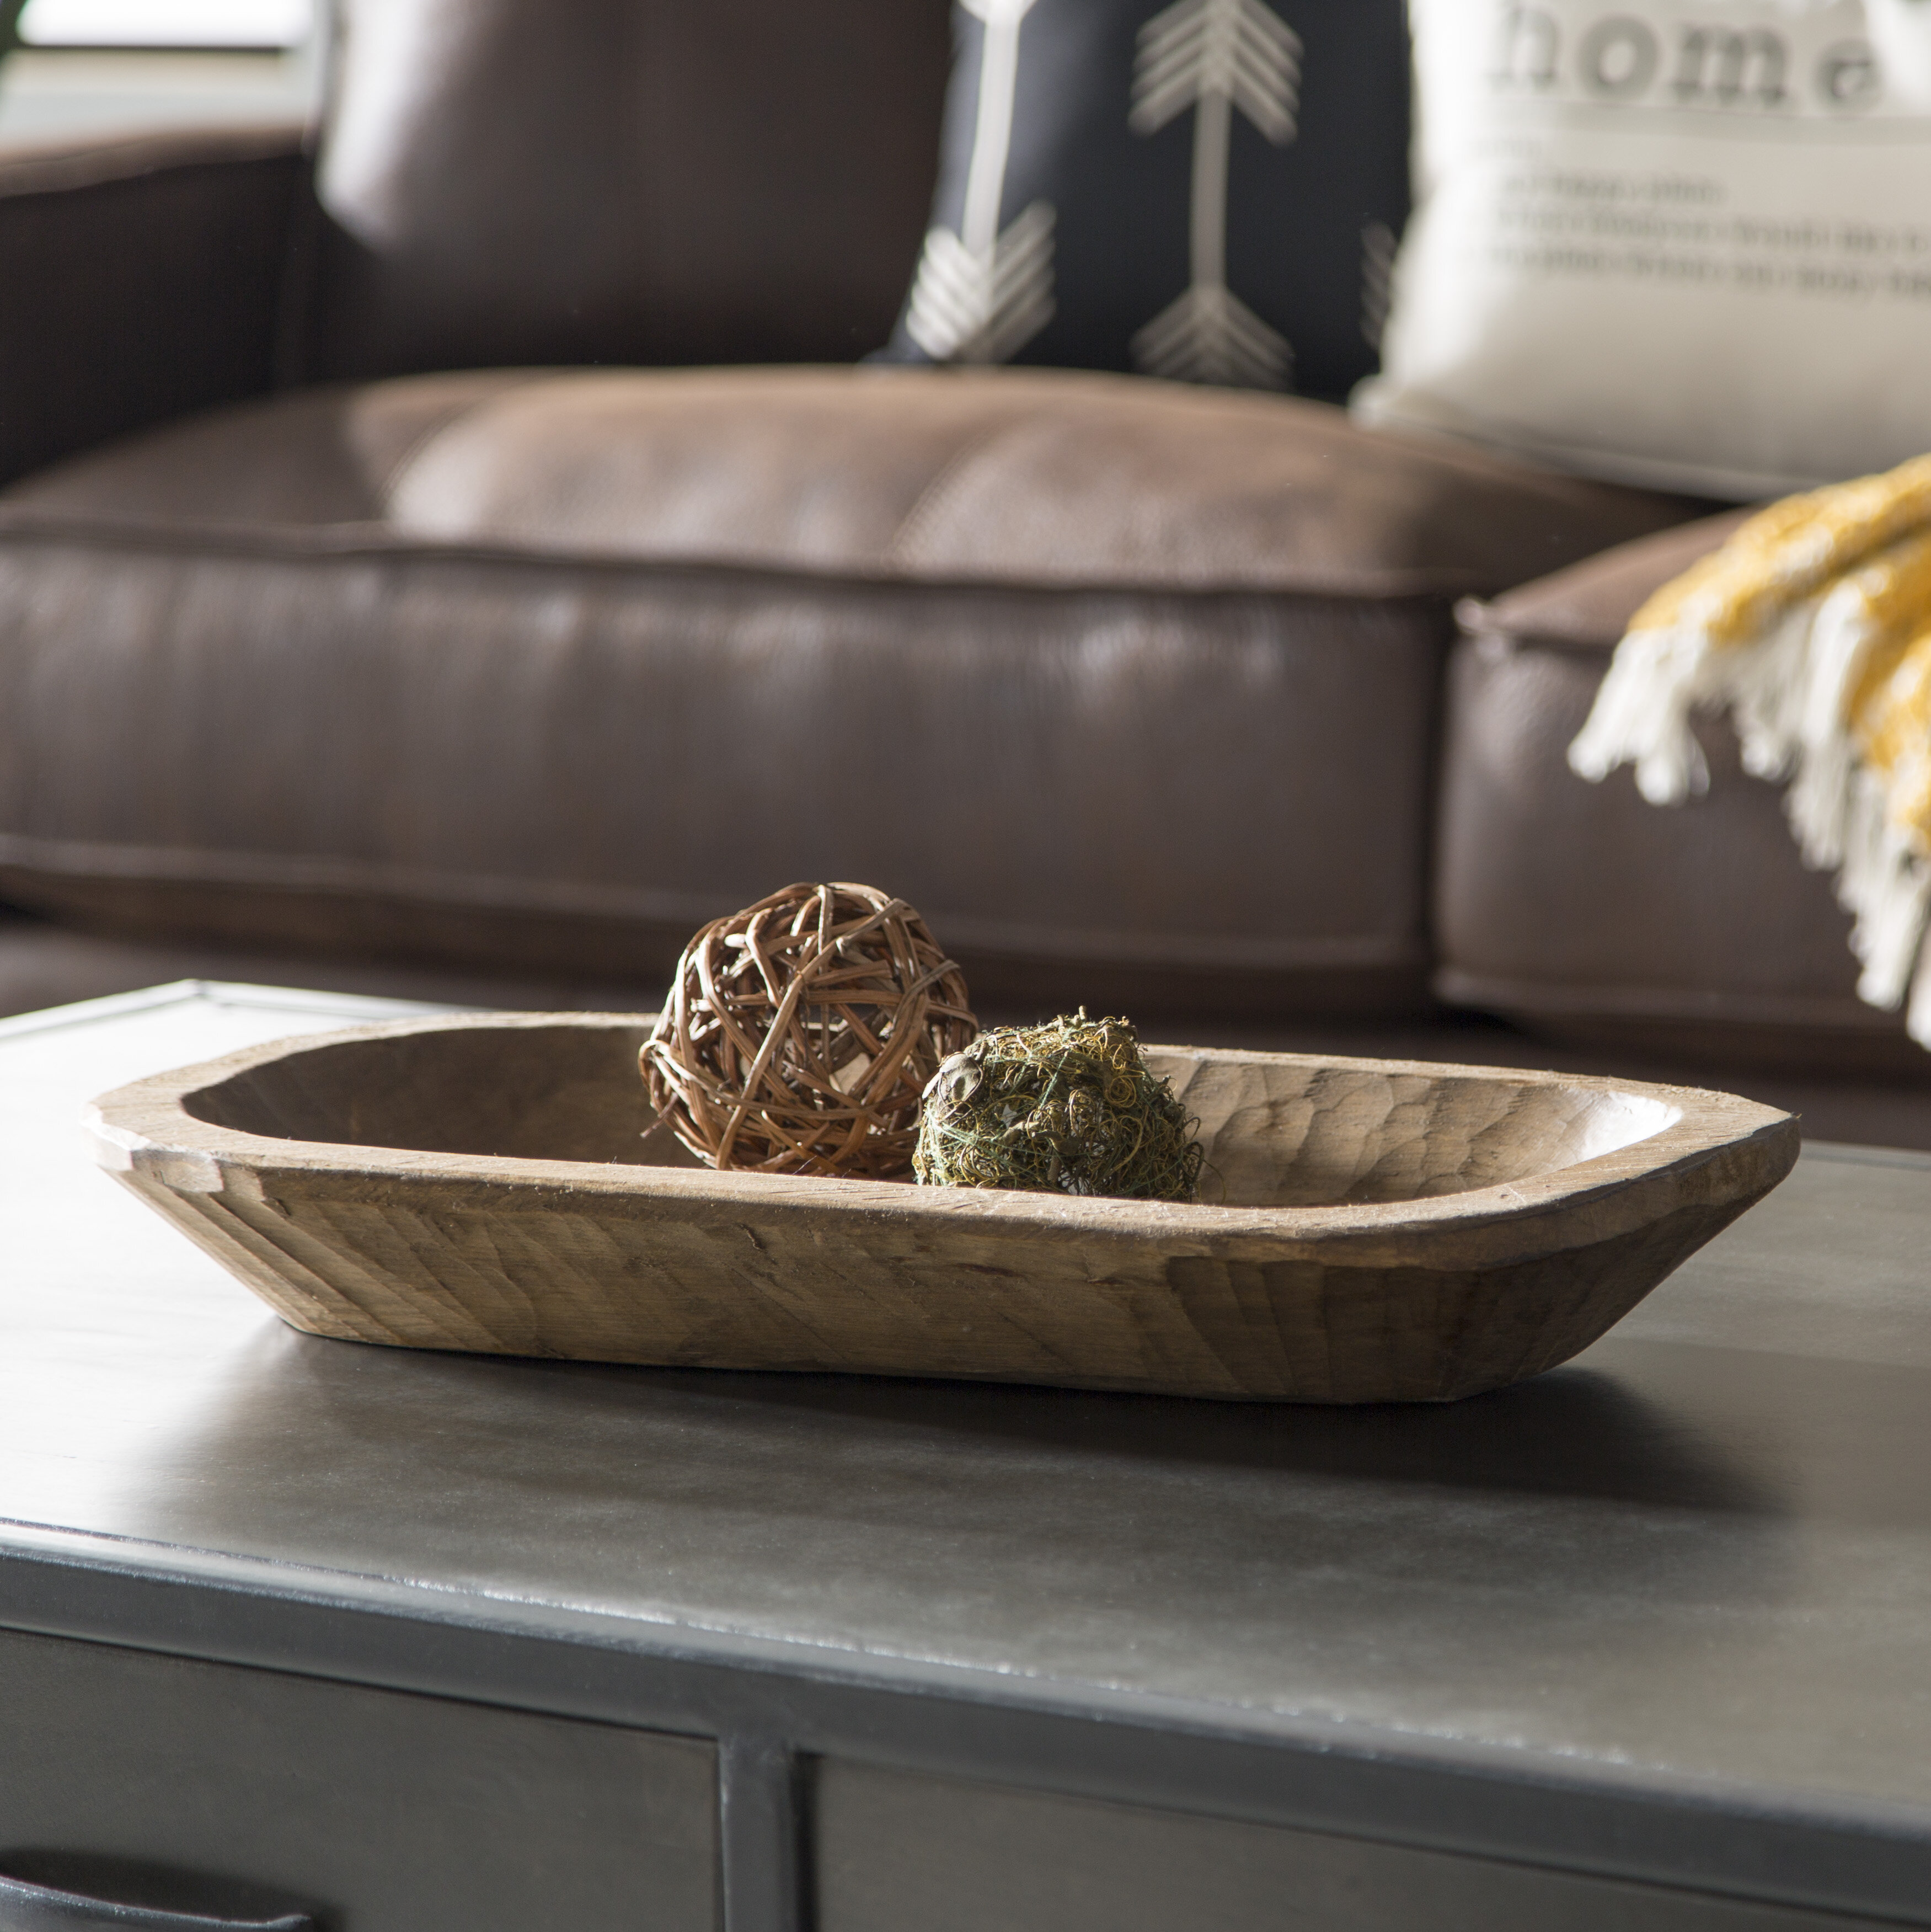 decorative fruit bowl en.casa home decoration accessories metal tray- copper colorued